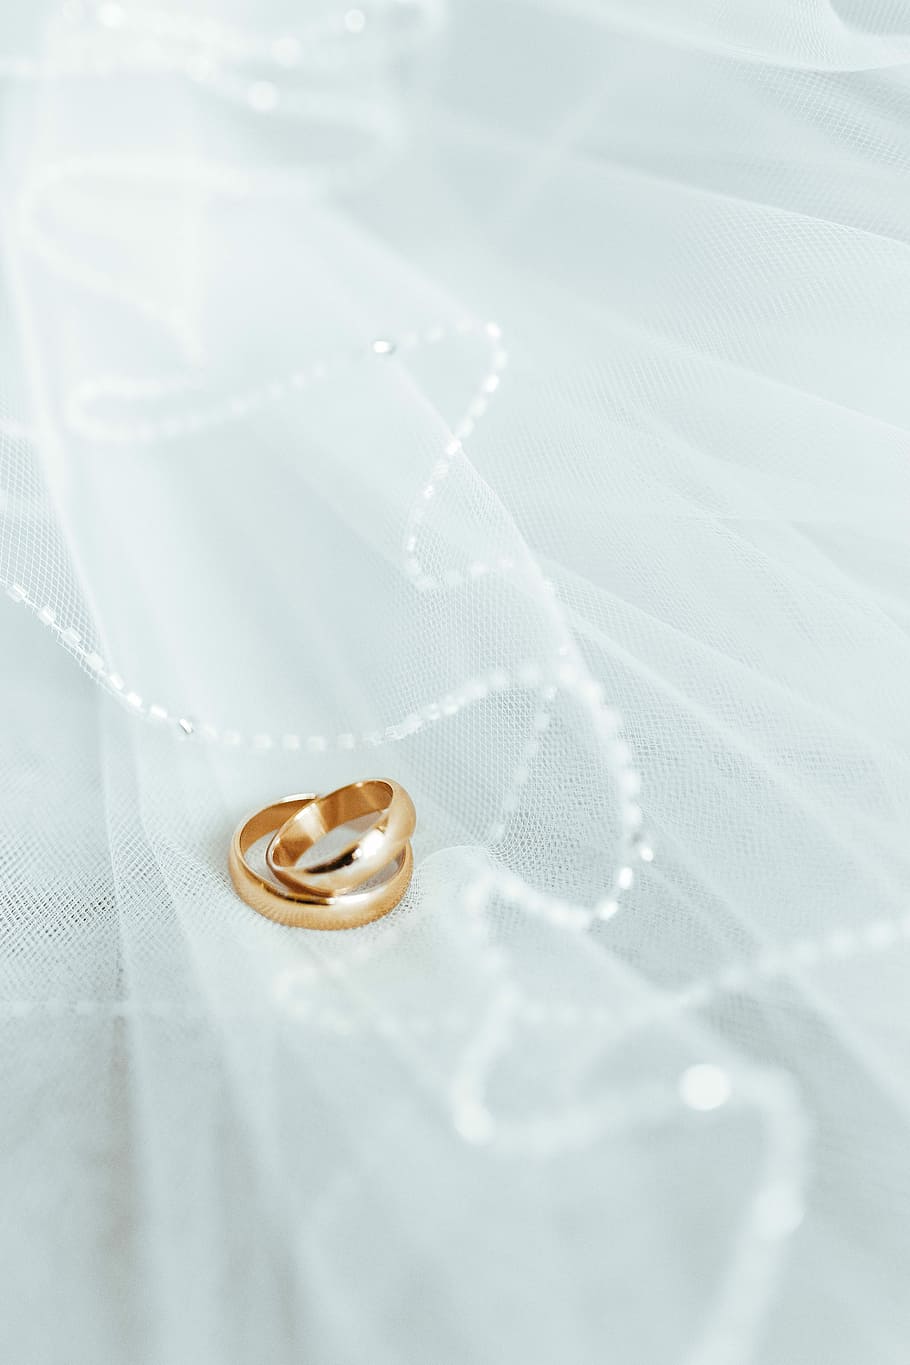 Preparations to a wedding, white, golden, diamond, dress, earrings